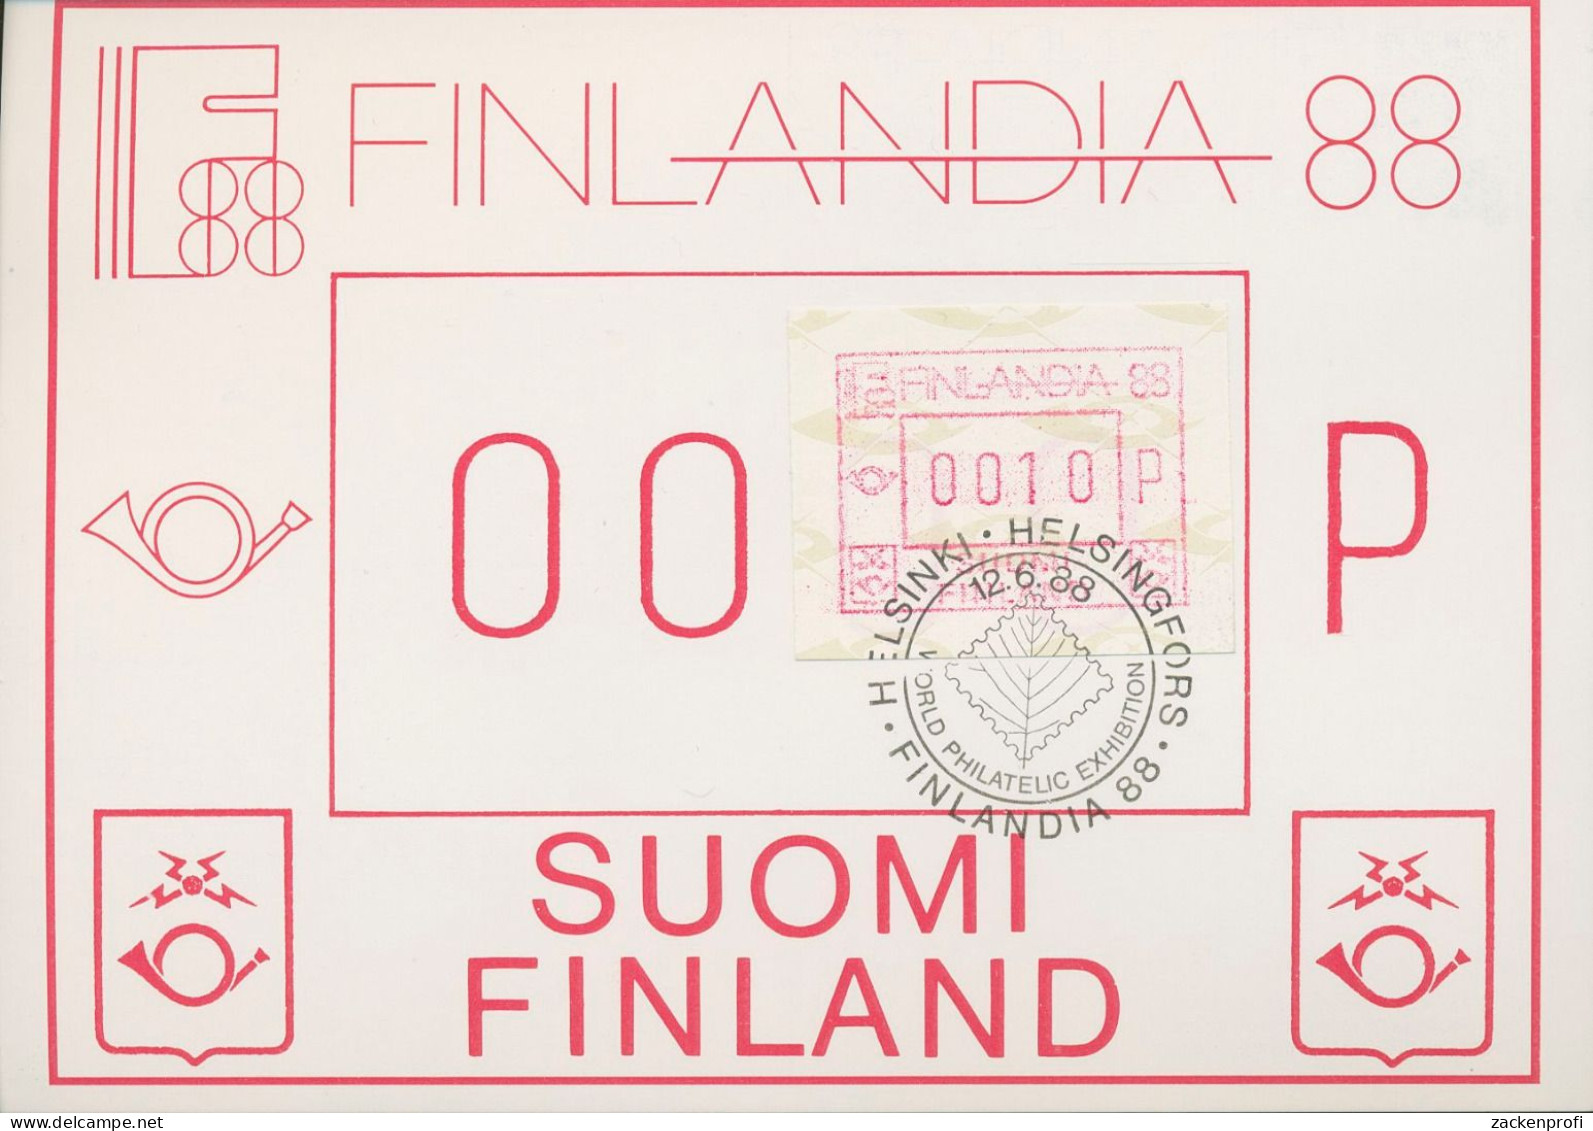 Finnland ATM 1988 FINLANDIA '88 Maximumkarte ATM 4.1 MK (X80566) - Machine Labels [ATM]